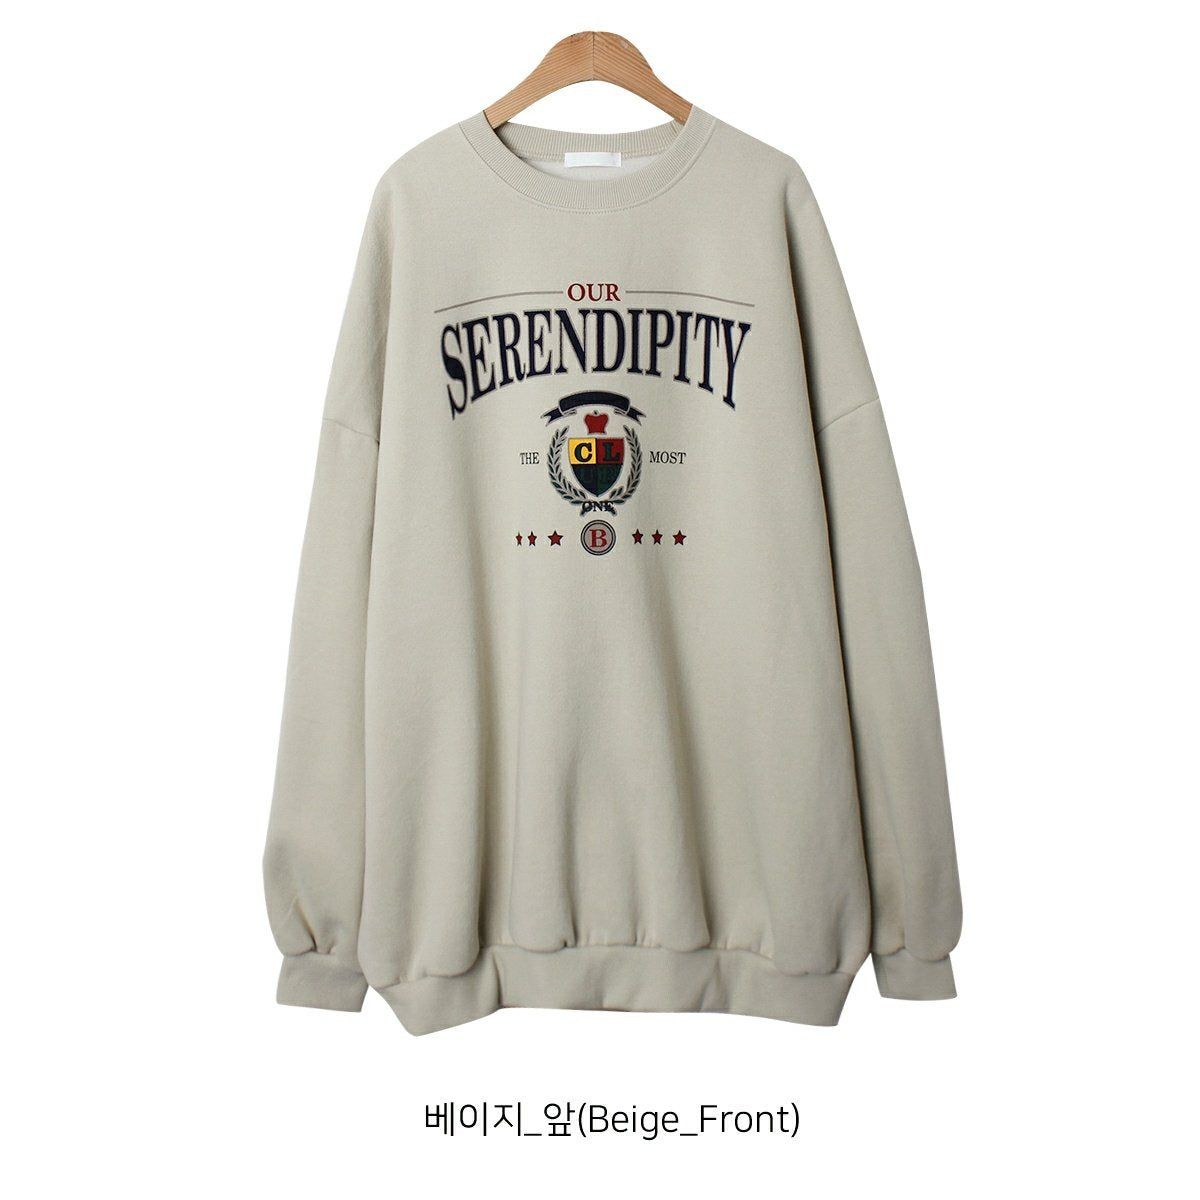 Serendipity Overfit Sweatshirts